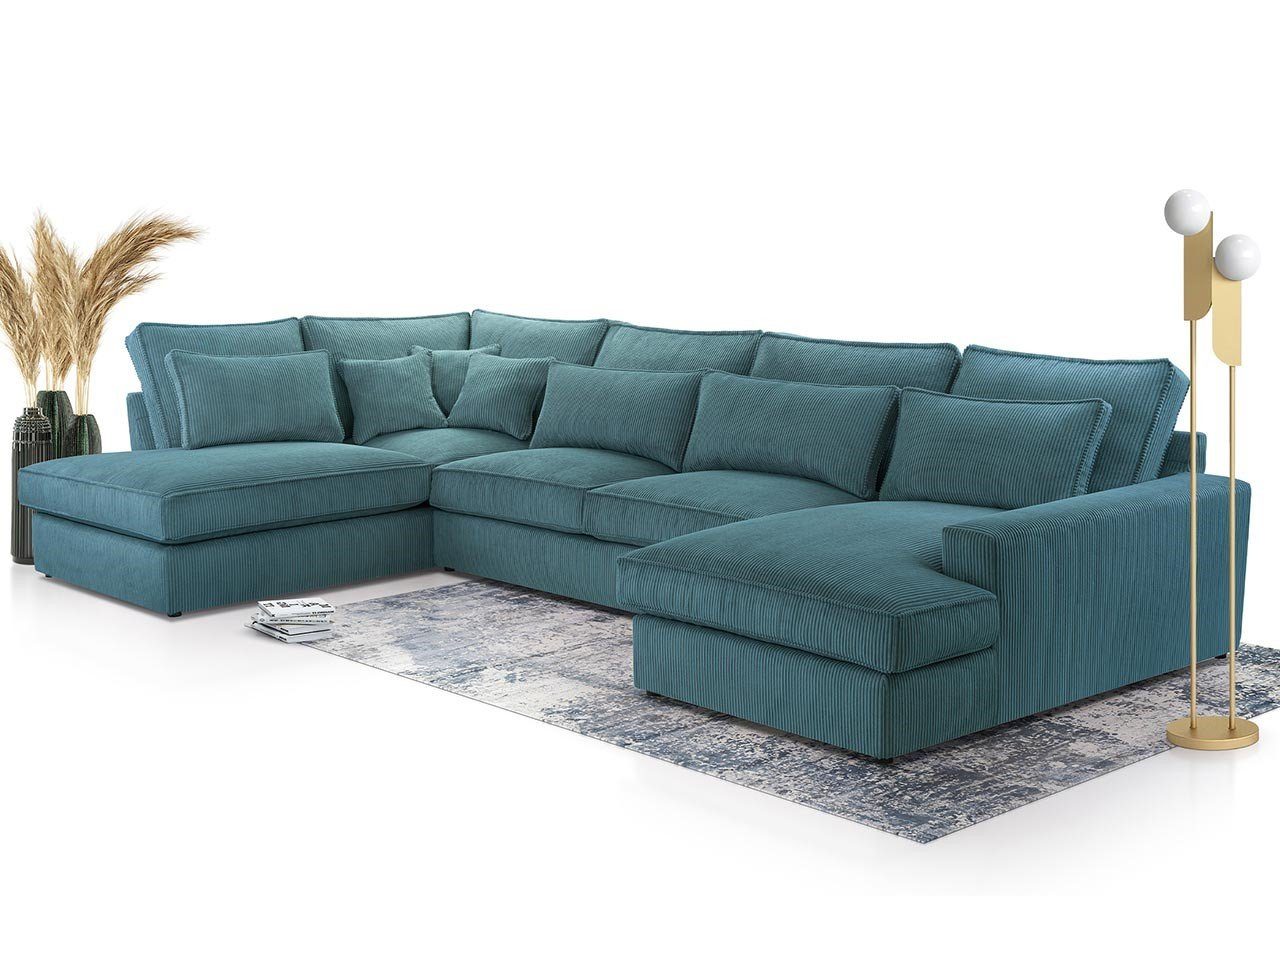 MKS MÖBEL Ecksofa CANES U, U - Form Couch, lose Kissen, modern Design Blau Lincoln